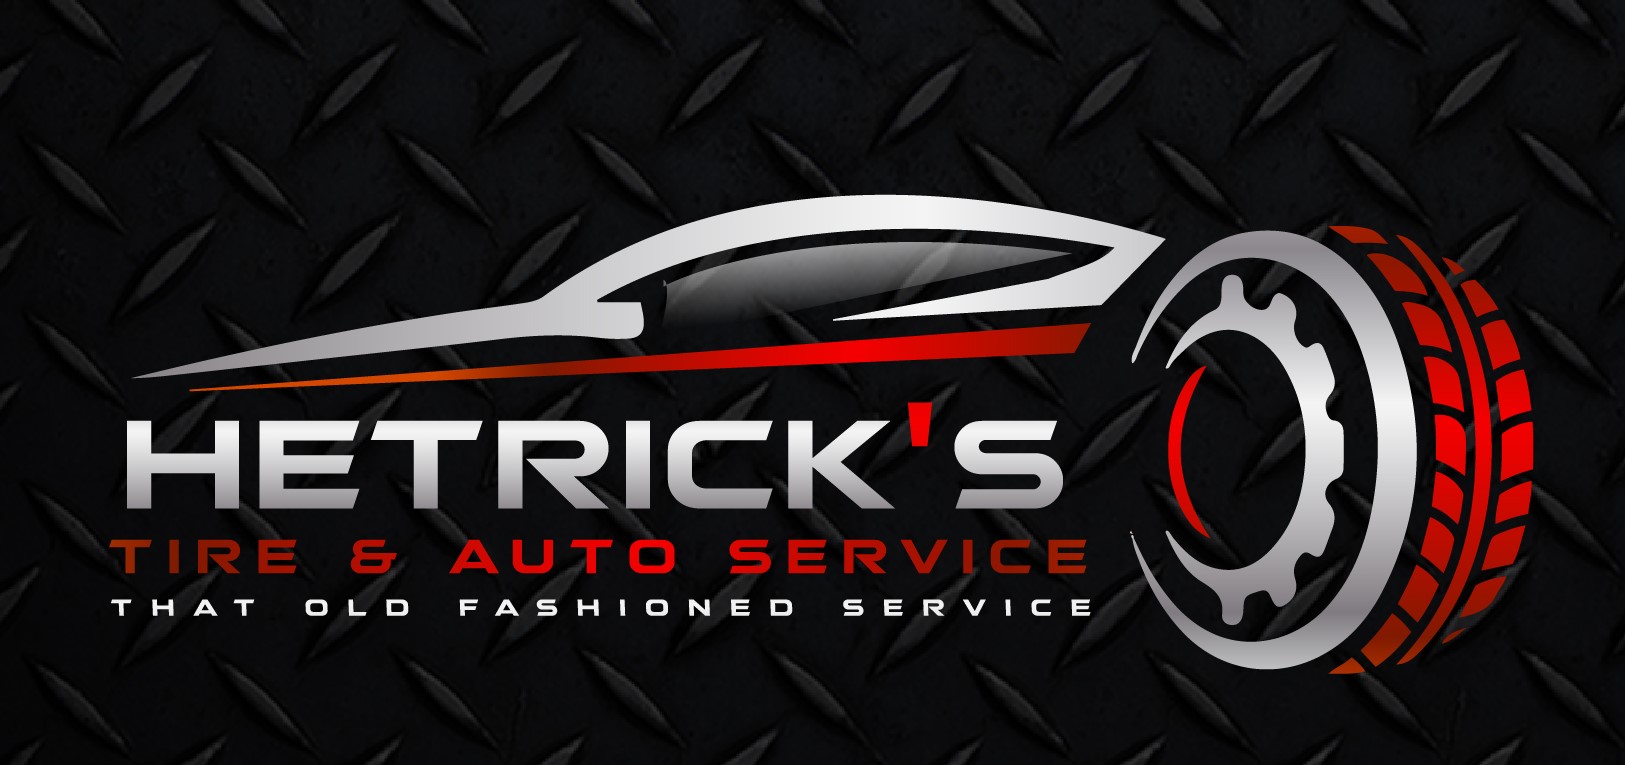 Hetrick's Tire & Auto Service